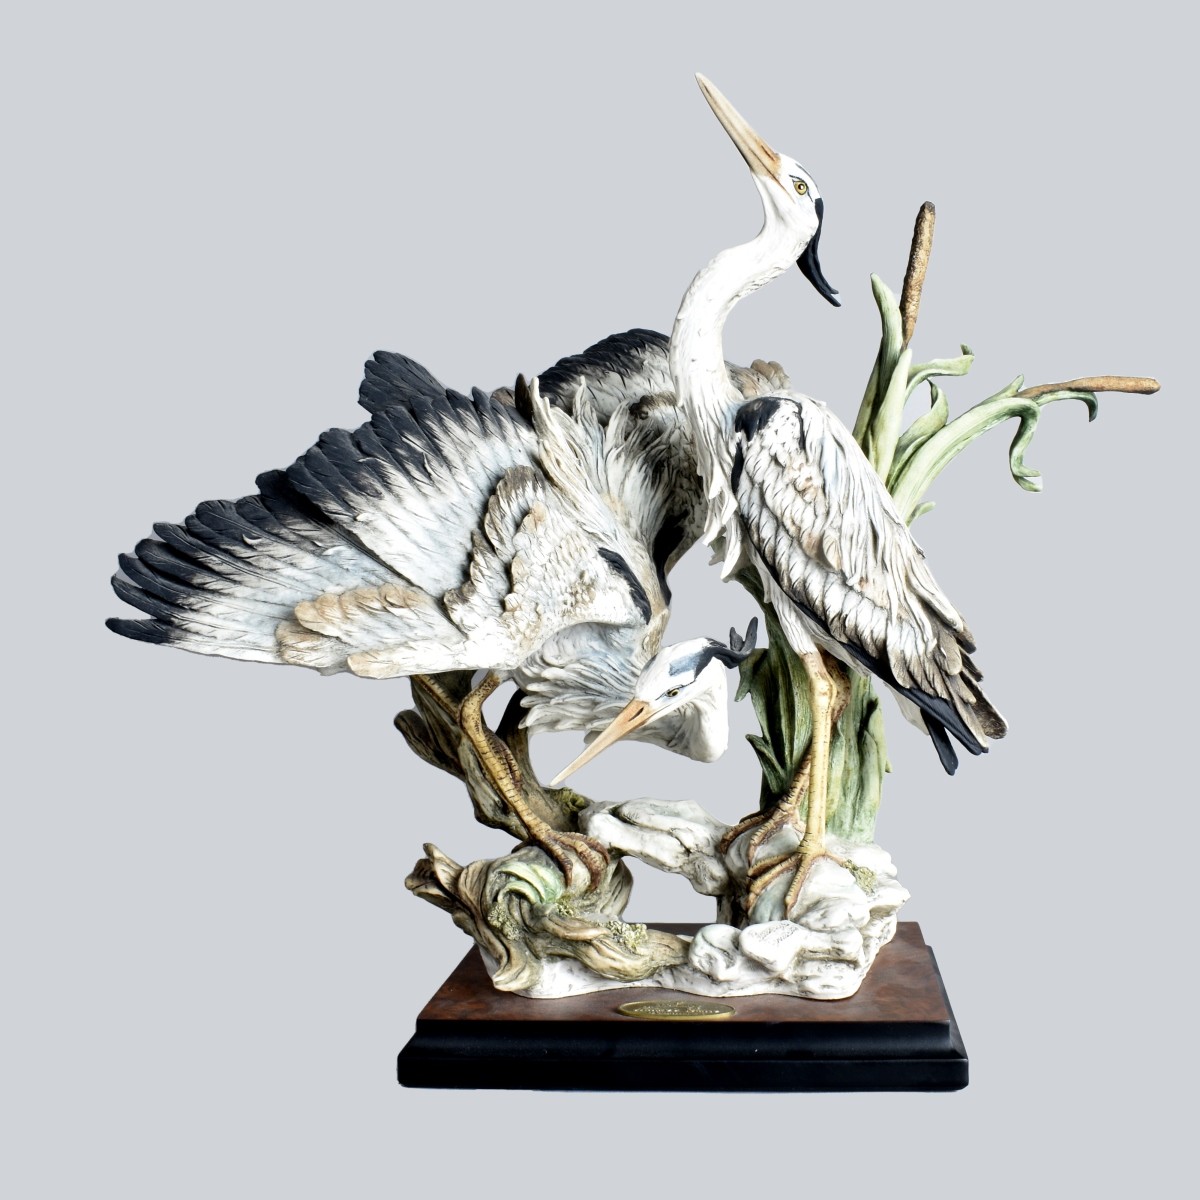 Guiseppe Armani "Nature's Dance" Figurine